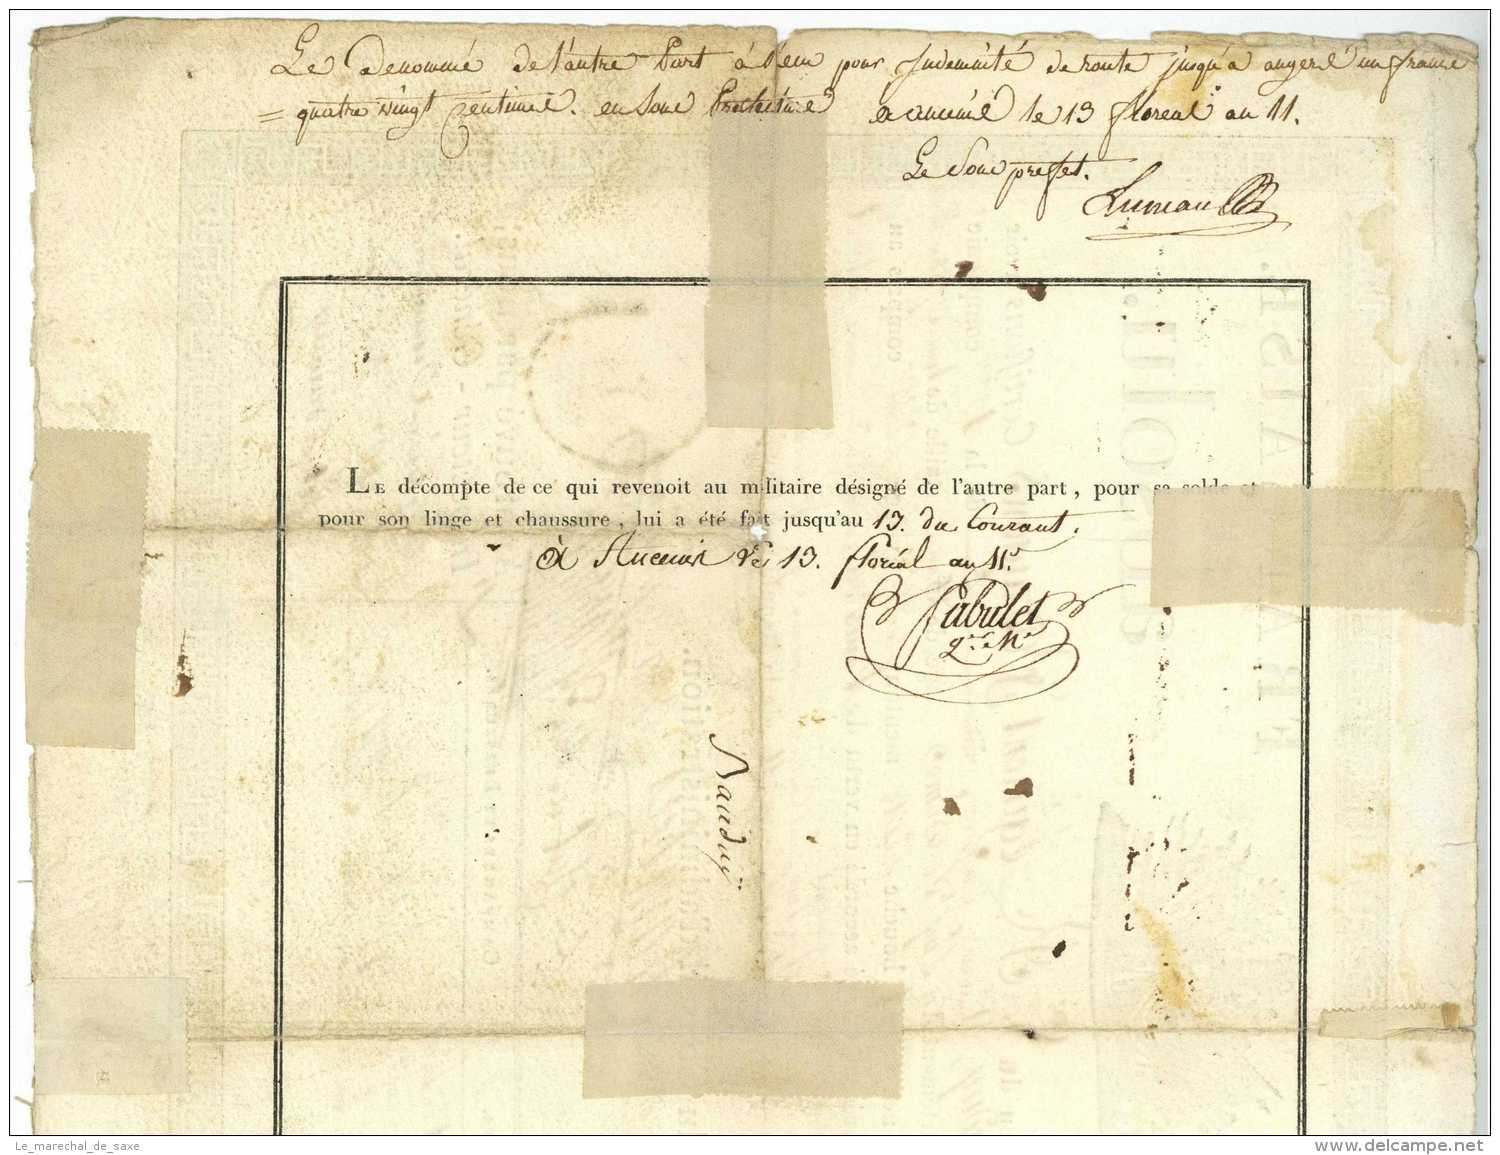 1er REGIMENT DE DRAGONS - 1803 - P.S. VIALLANES, DU MUY Generaux - Watrin Rouzian Fiche Fabulet Chambert - Documenti Storici